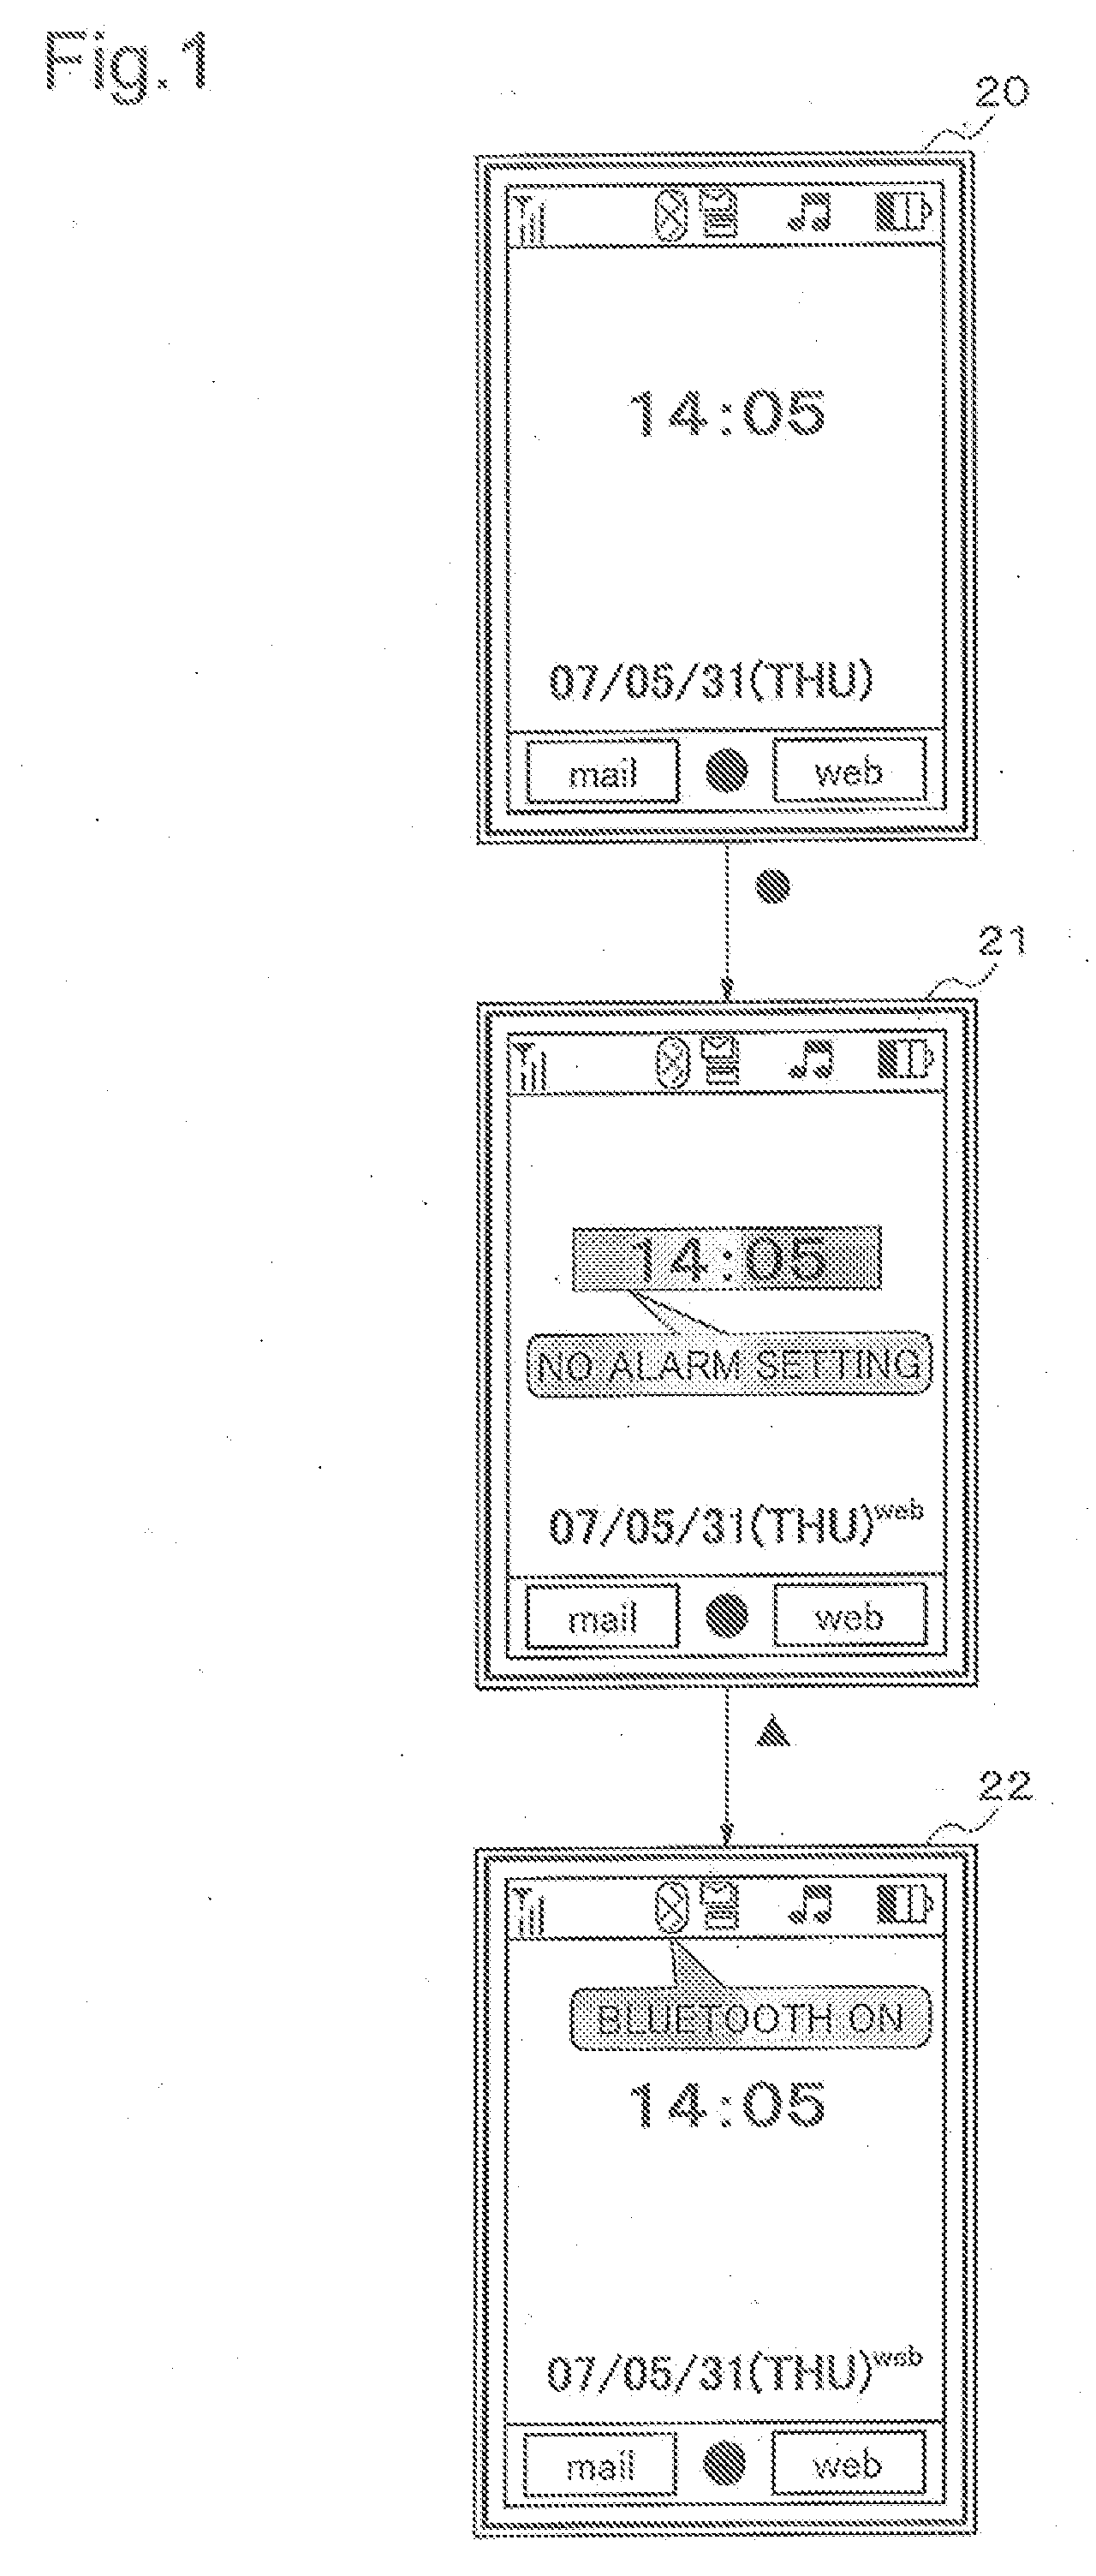 Mobile terminal apparatus and display method